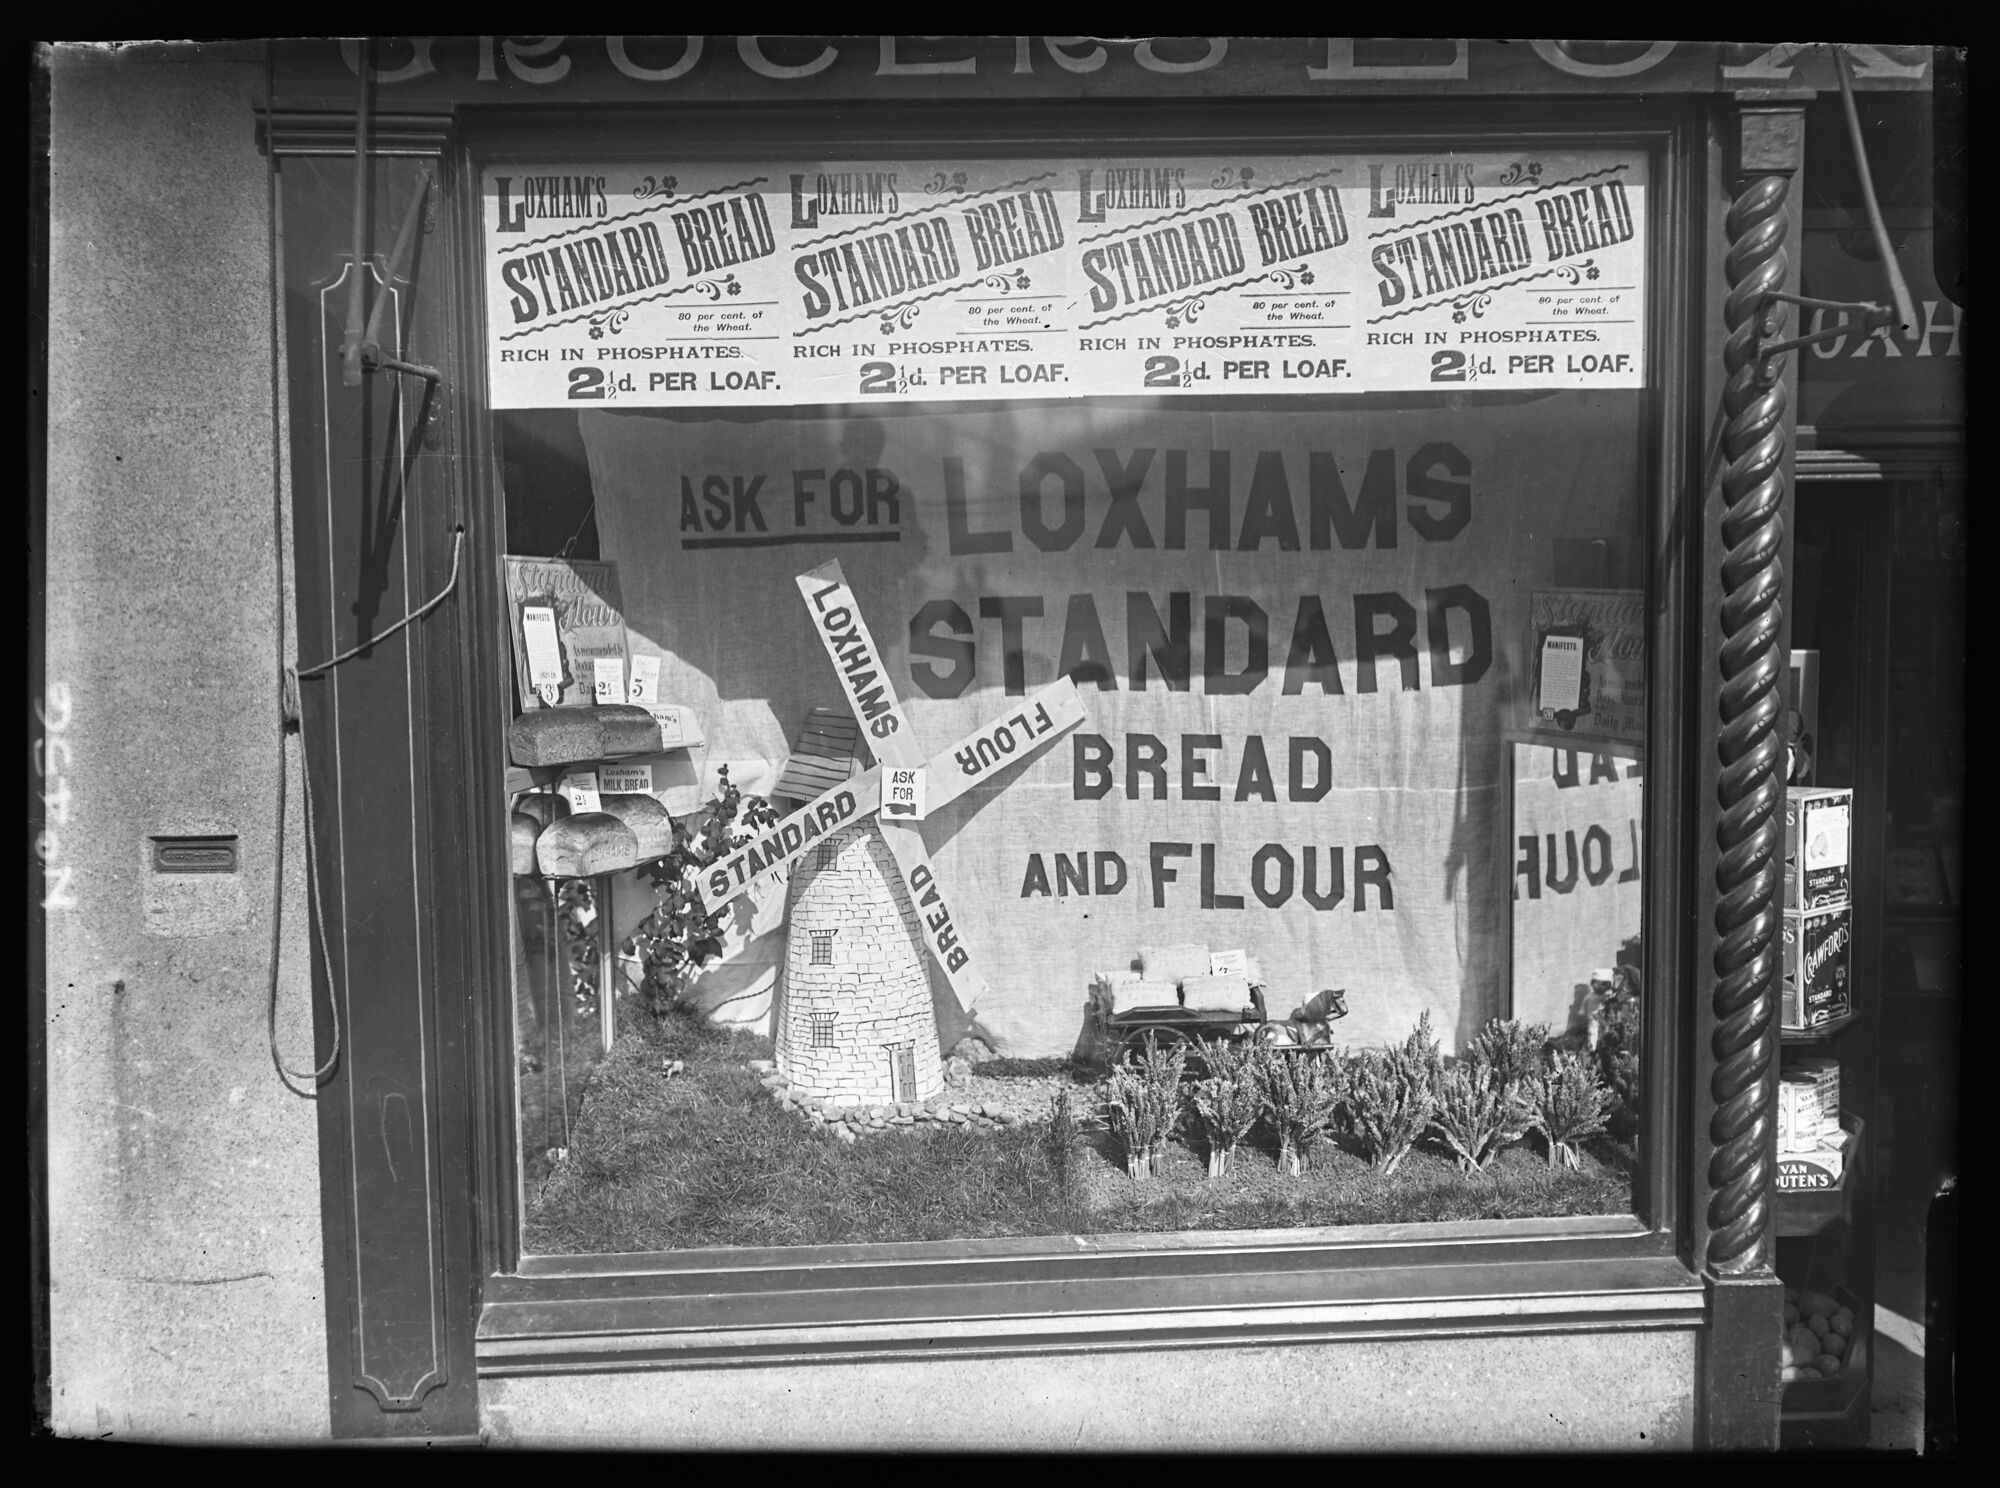 Loxhams Bread Shop, Cavendish Street, Barrow-in-Furness